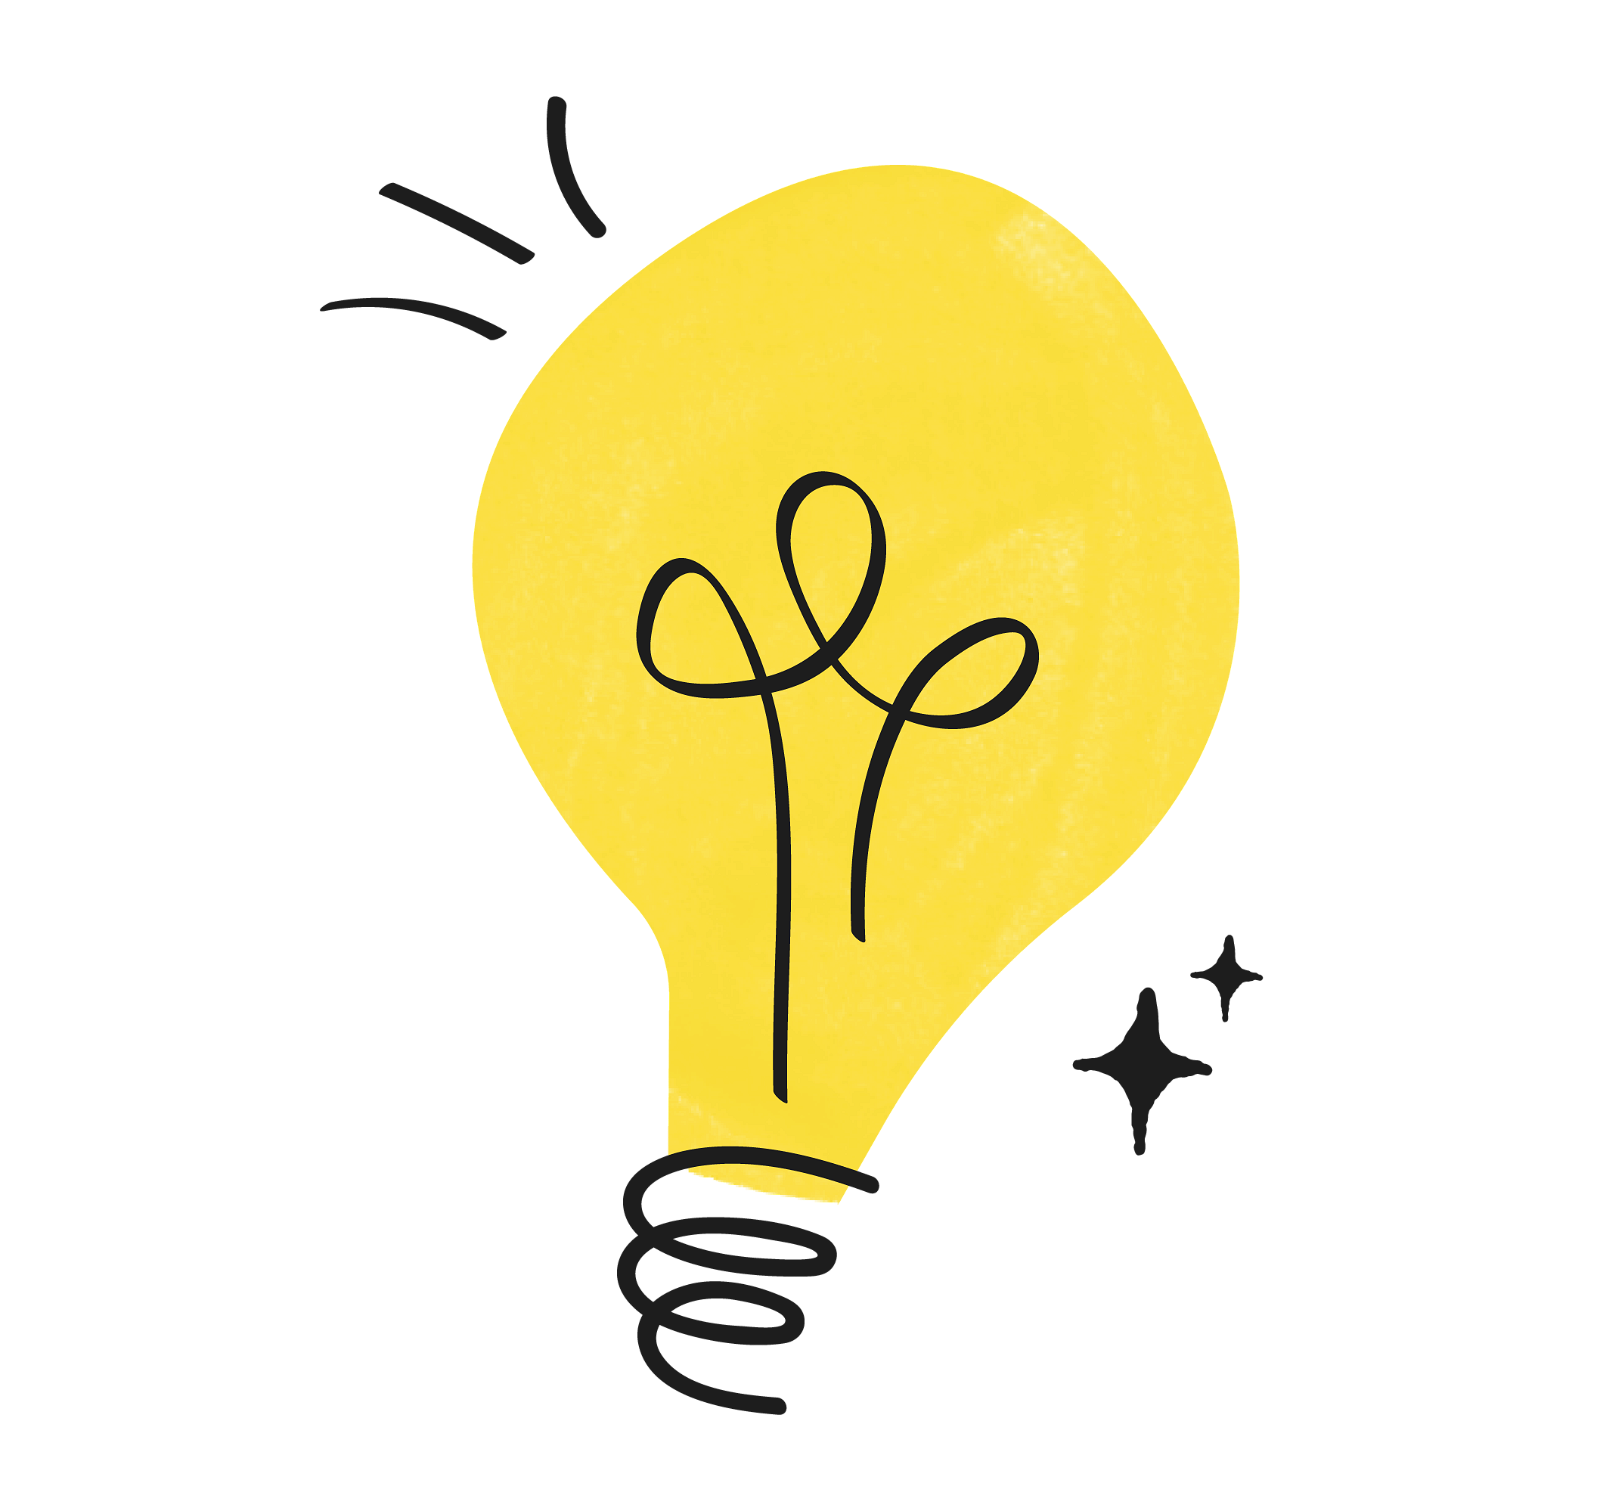 little yellow lightbulb icon with stribe branding